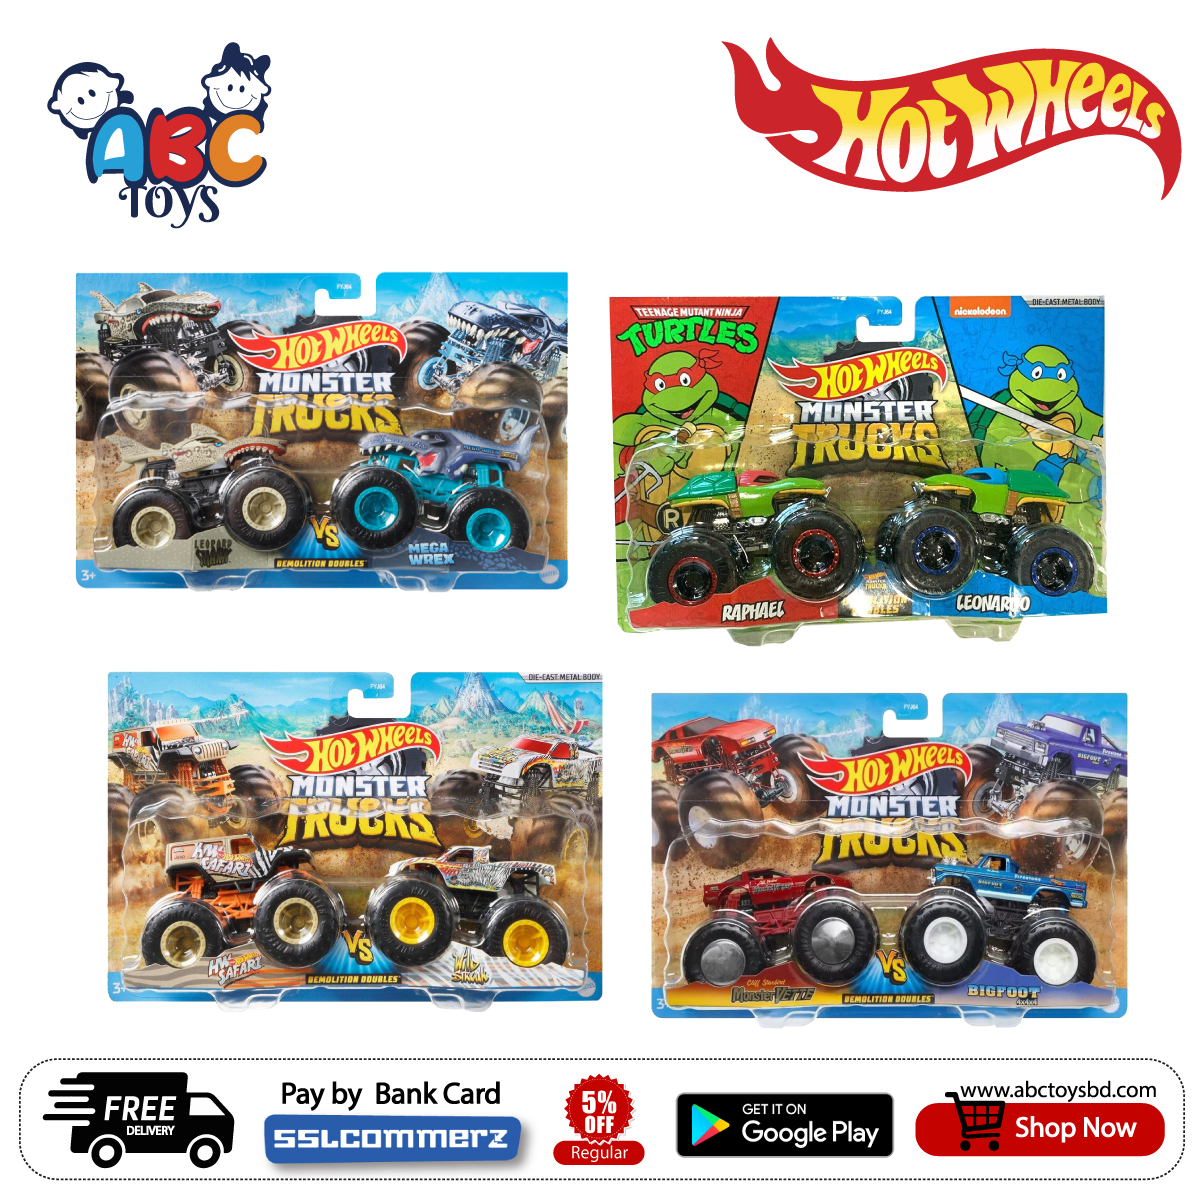 Best Buy: Hot Wheels Monster Trucks Demolition Doubles (2-Pack) Styles May  Vary FYJ64